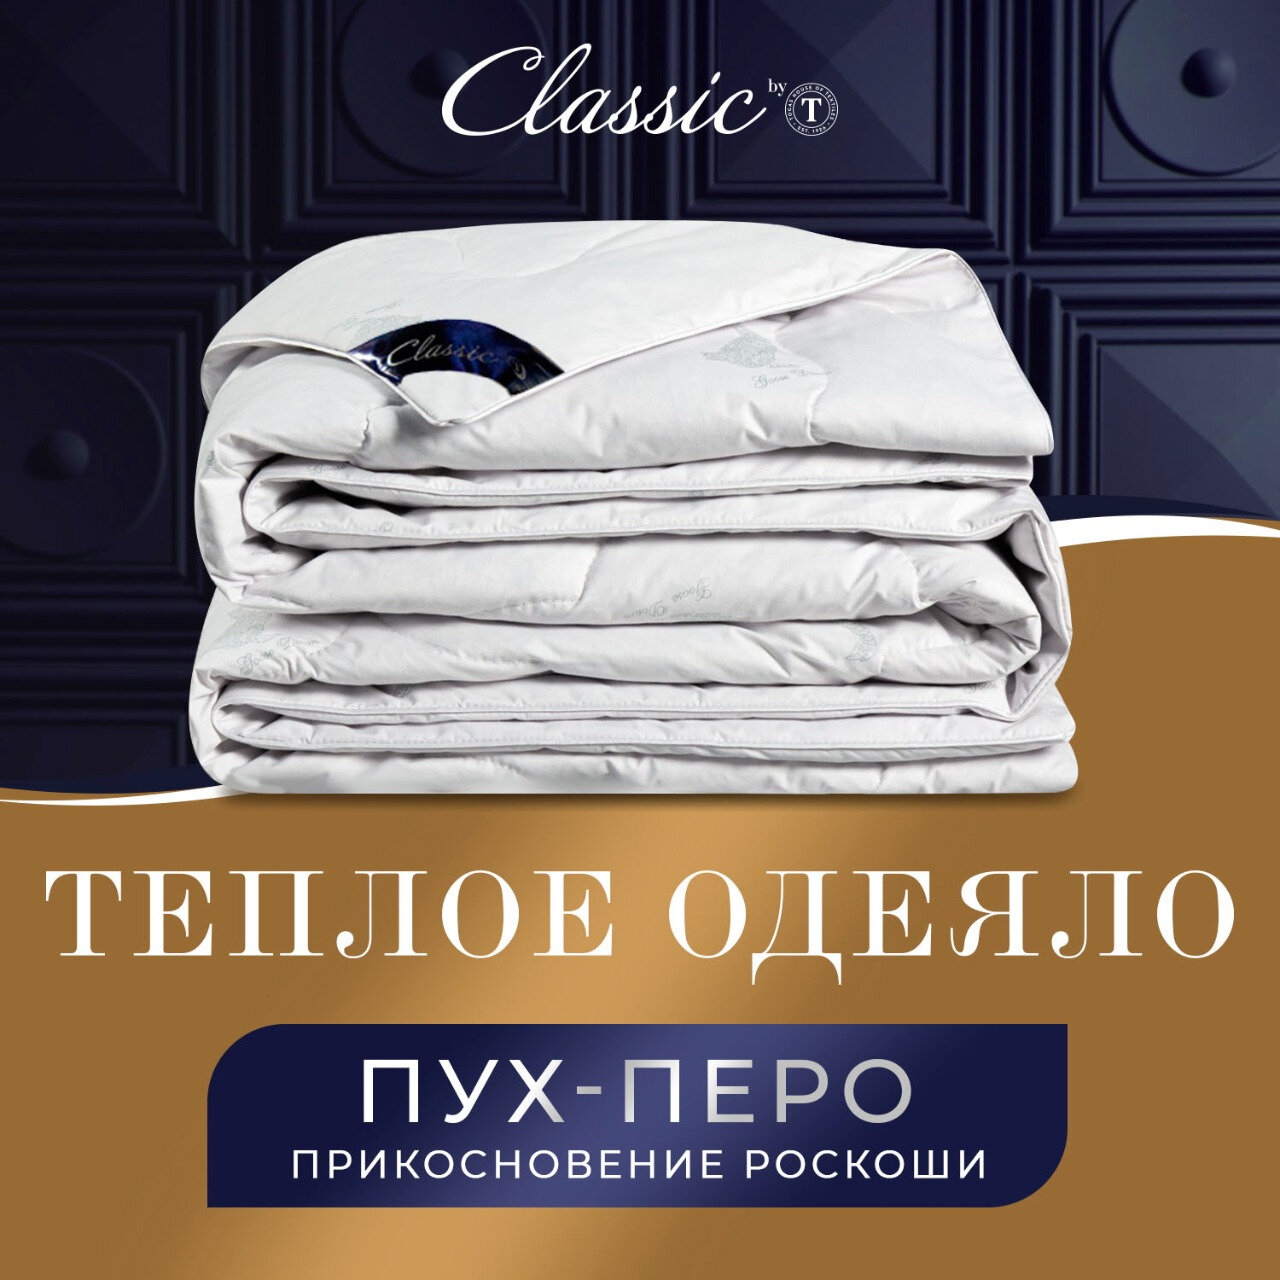 Одеяло Classic by togas пушэ 175х200 - фото №8